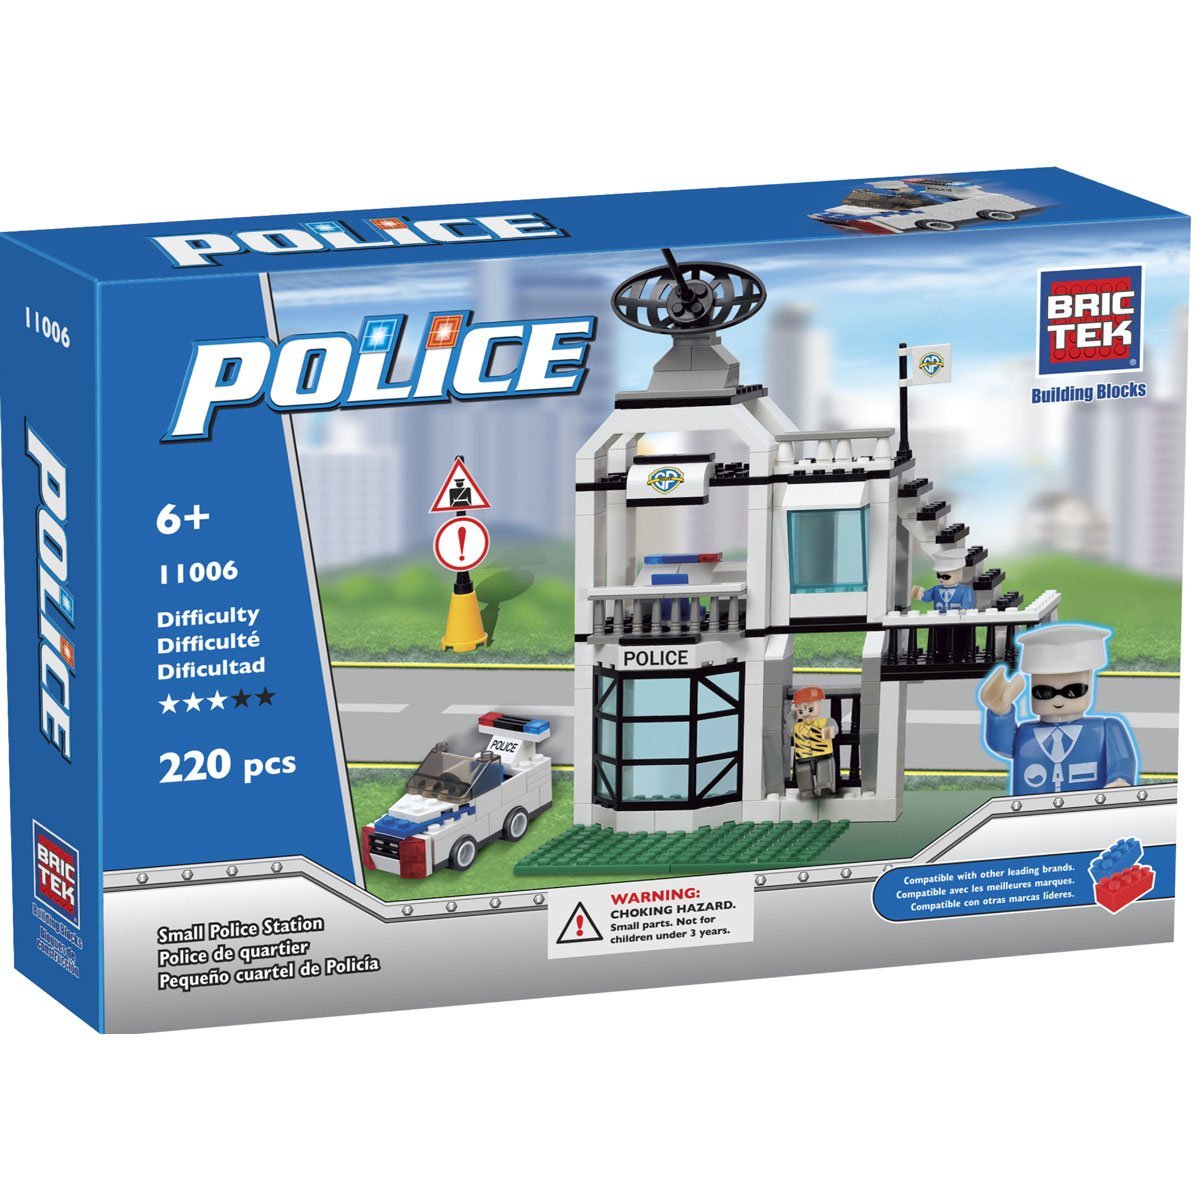 Brictek Police Small Police Station Toy Plus